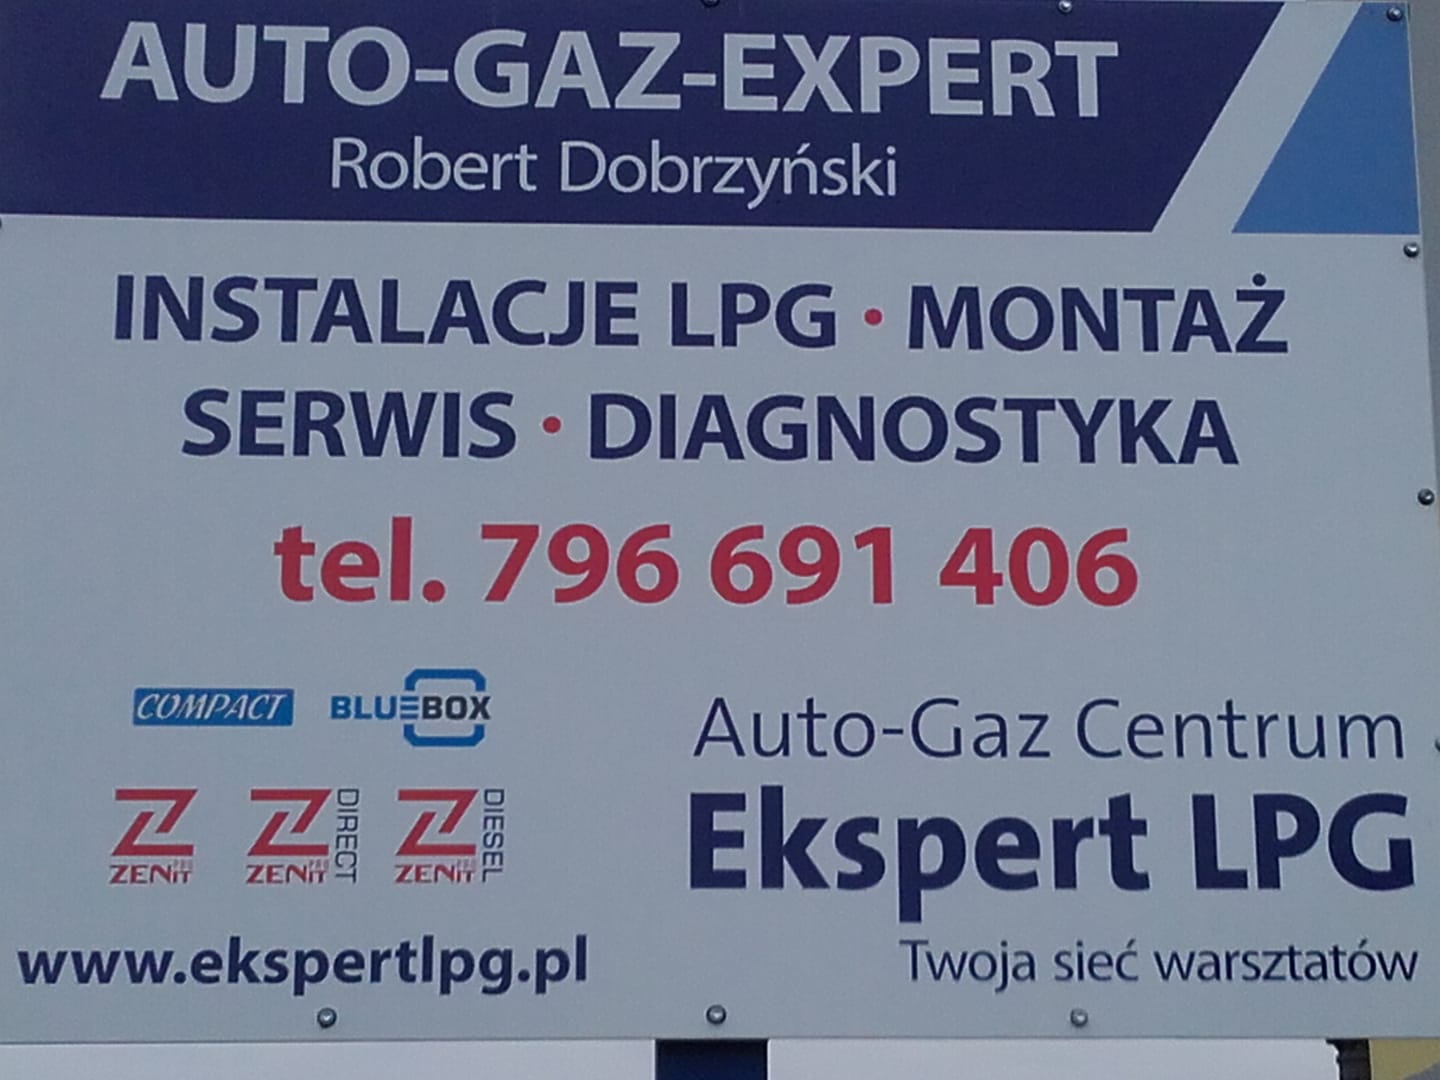 AUTO-GAZ-EXPERT Robert Dobrzyński